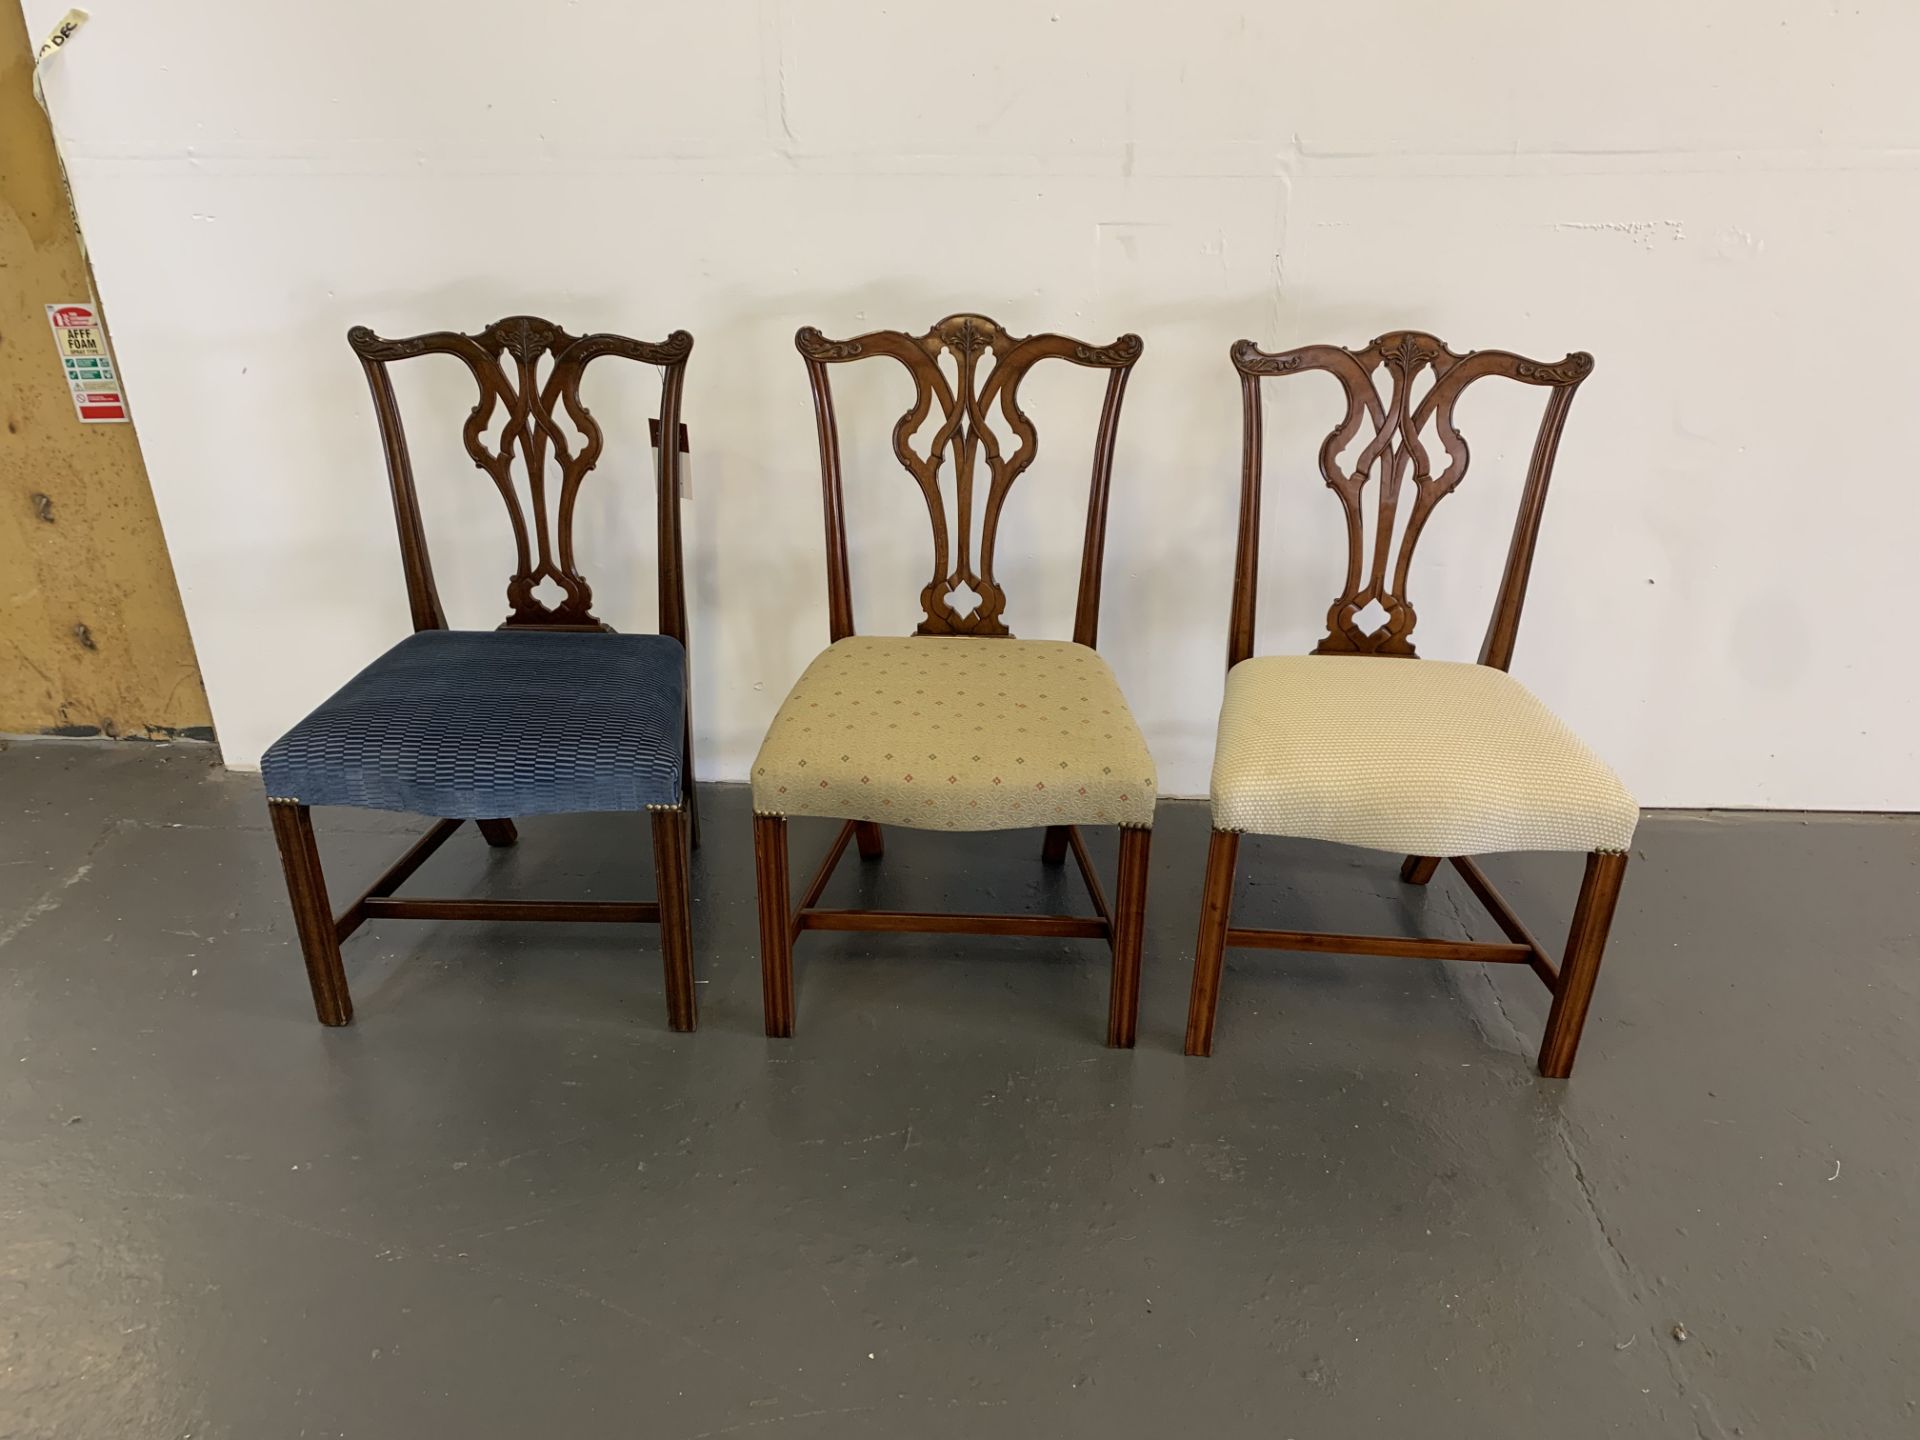 Arthur Brett Mahogany Carved Side Chair - Image 2 of 4